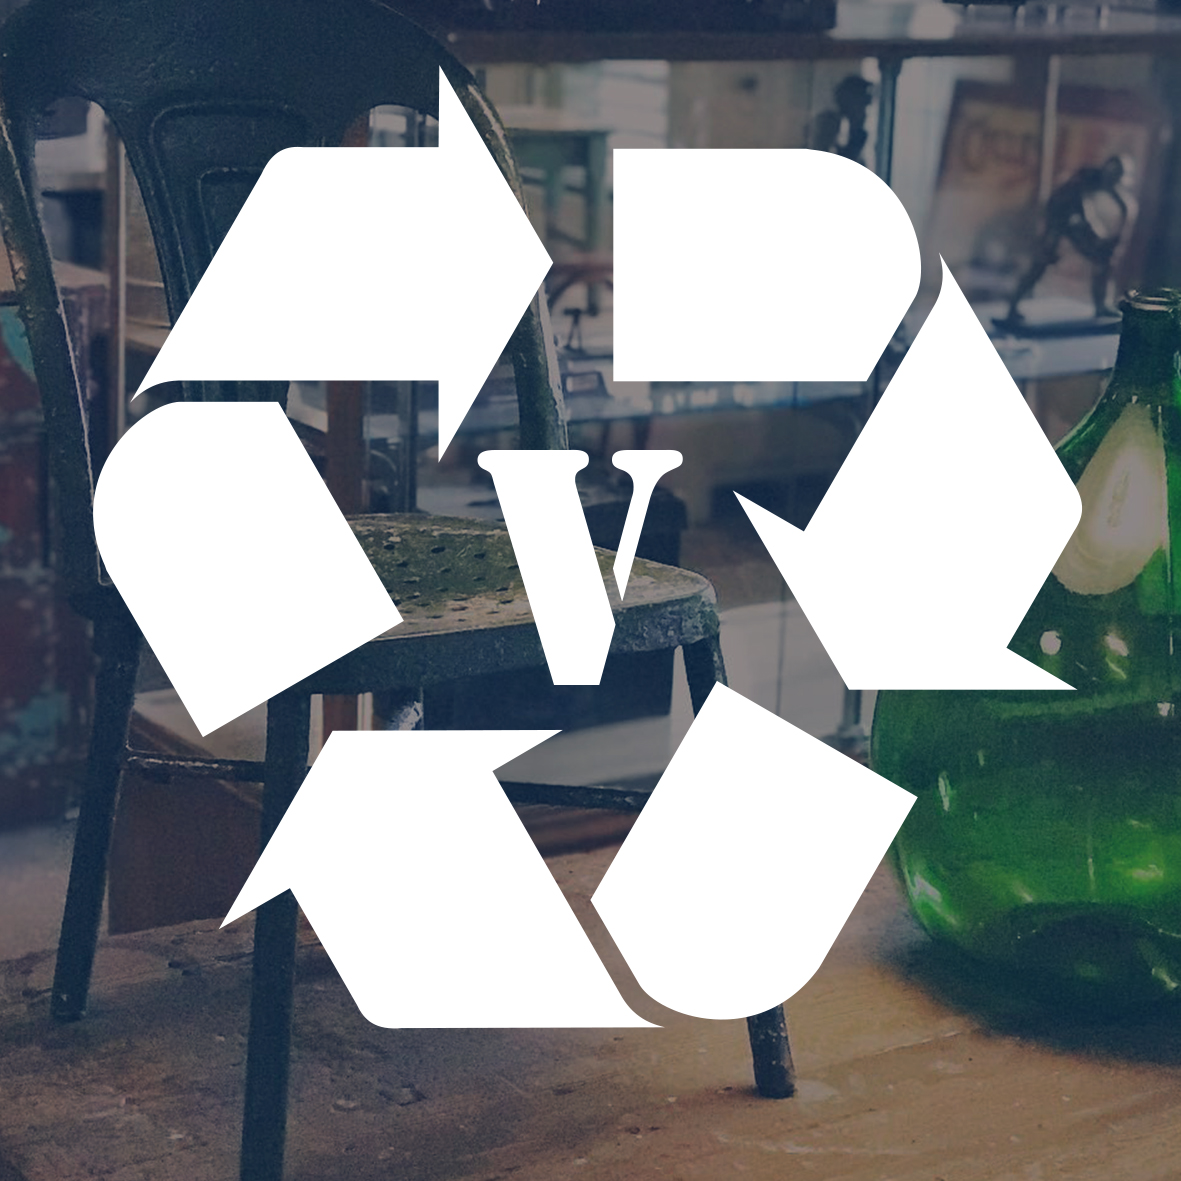 Vivre's upcycling & recycling